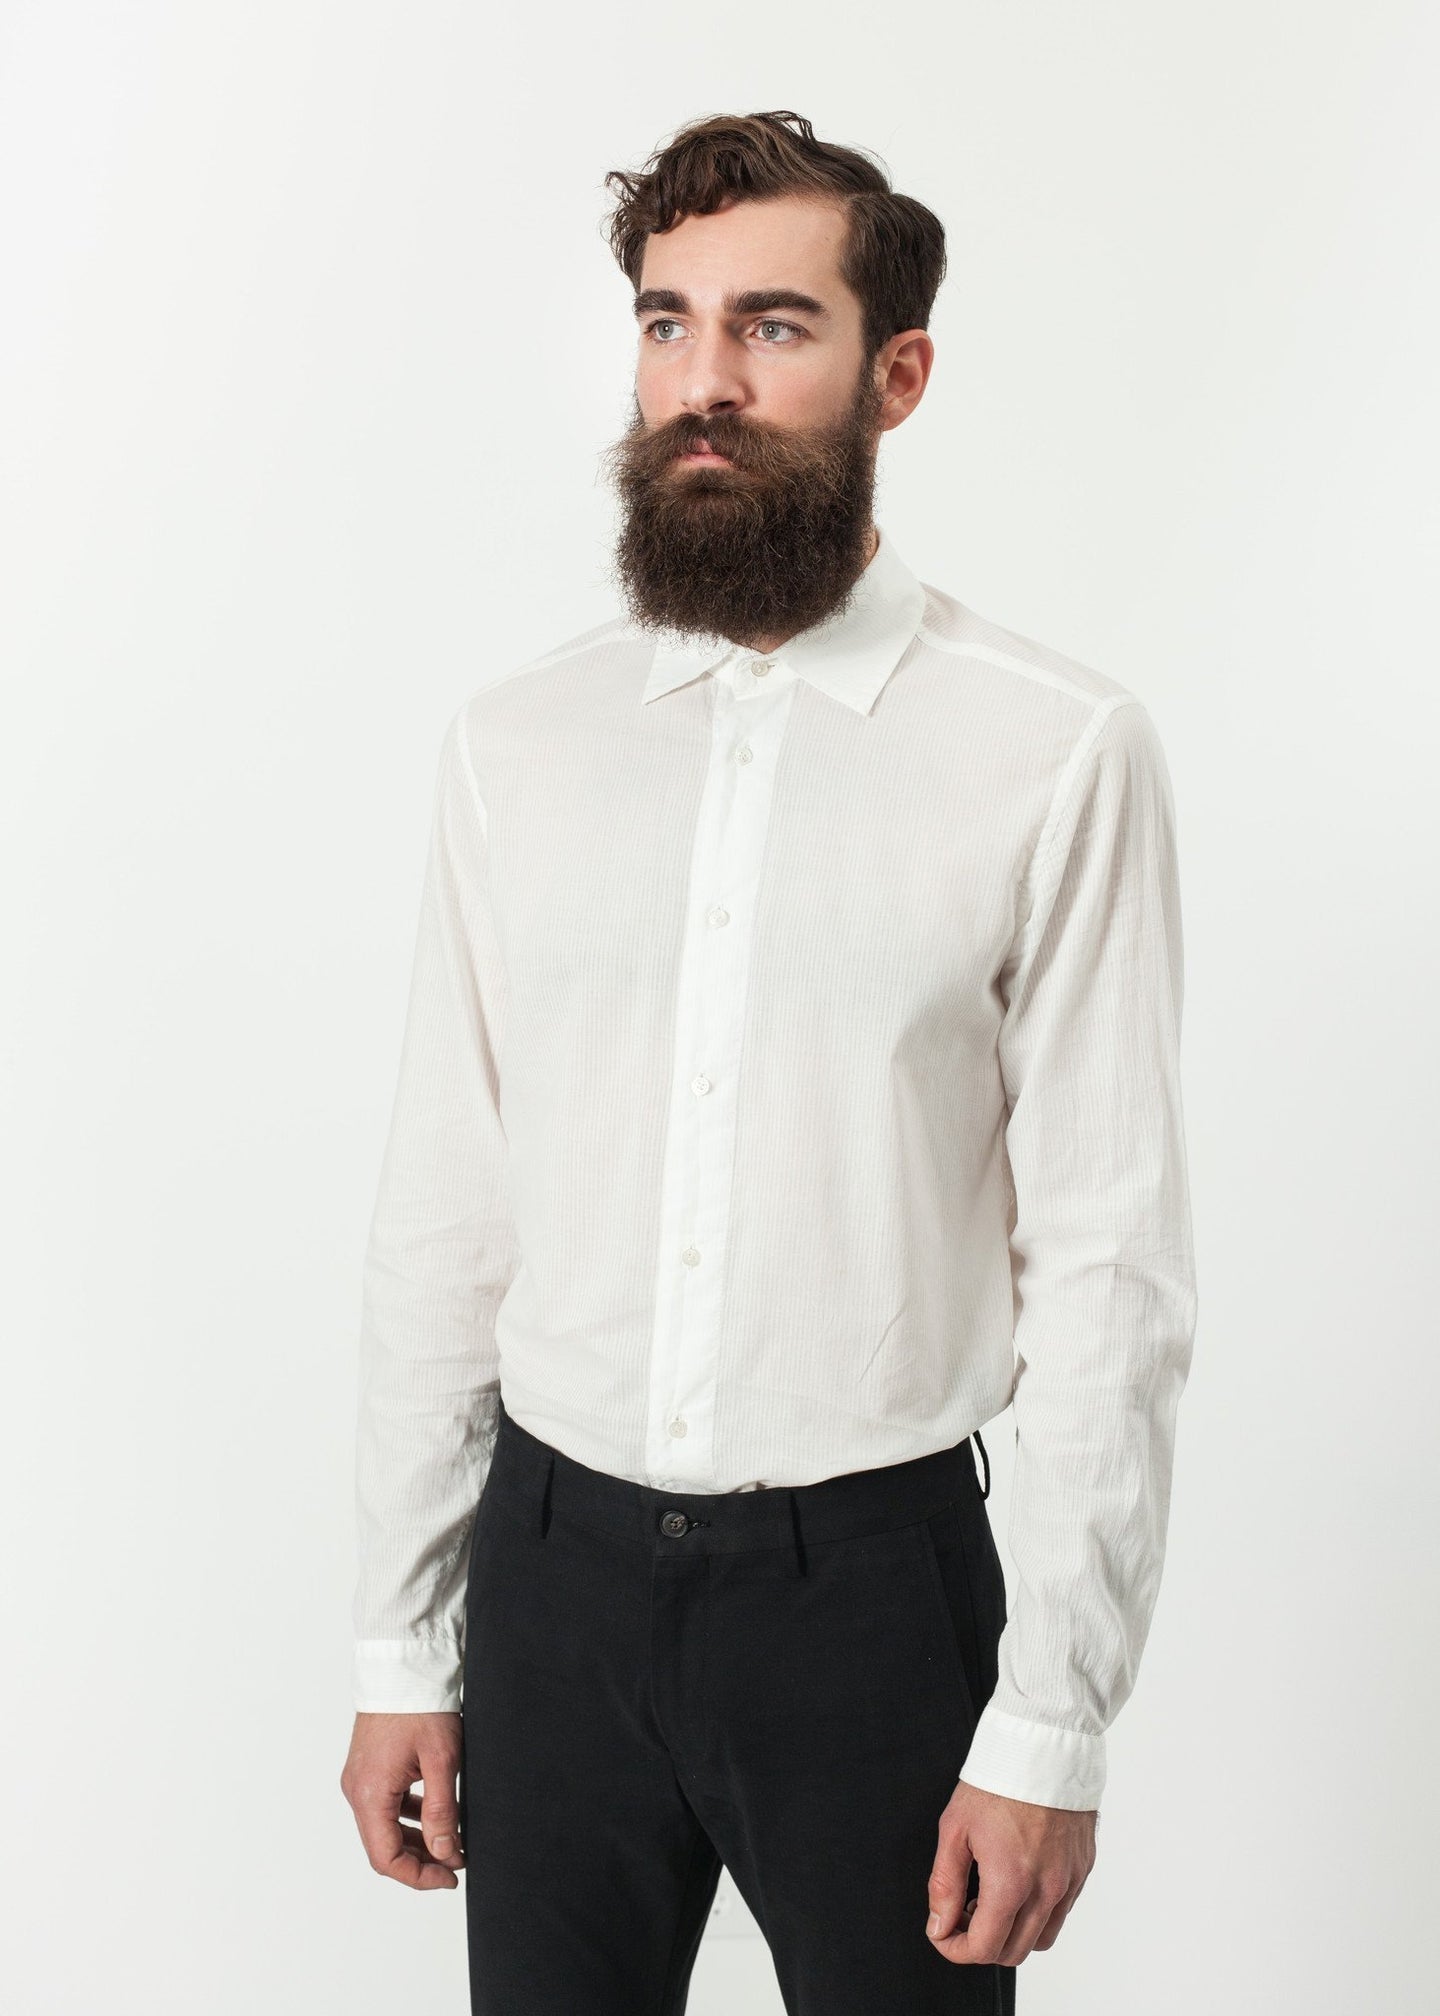 Hempel Shirt in White